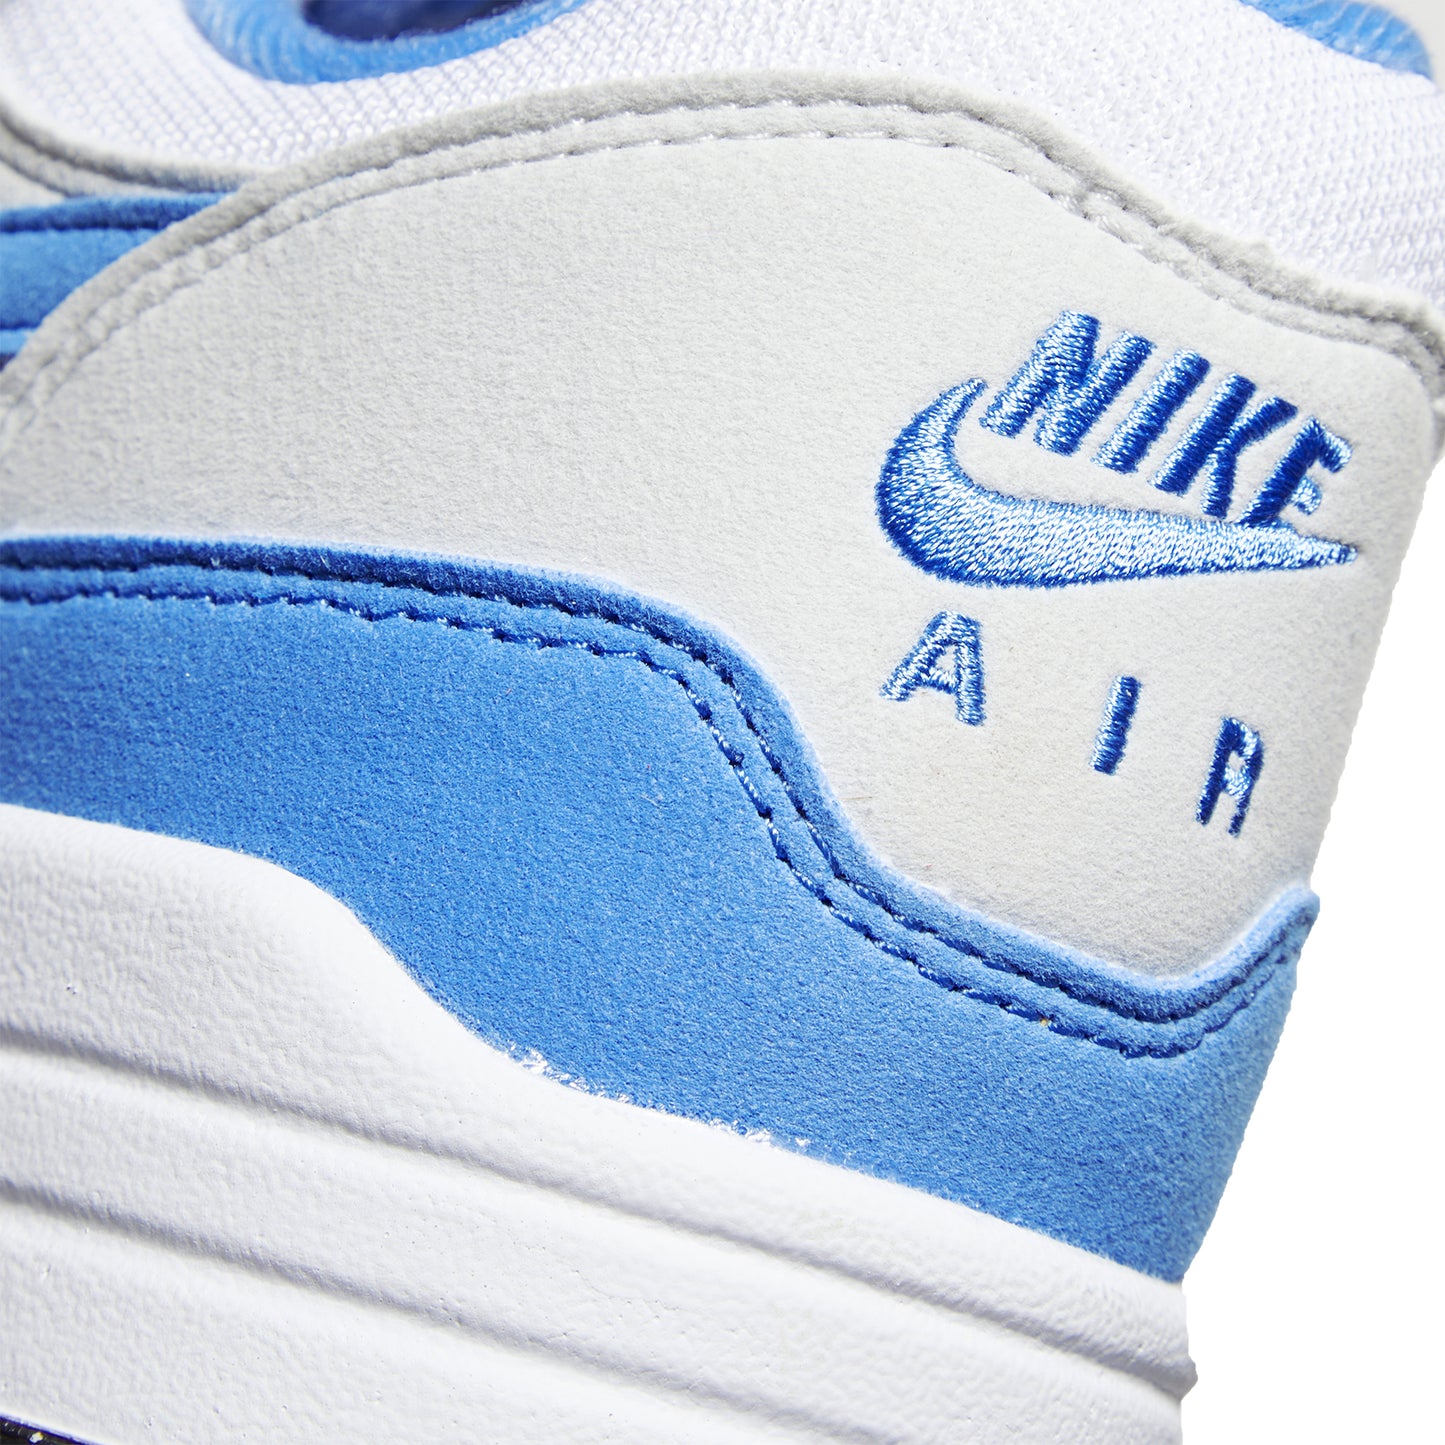 Nike Air Max 1 (White/University Blue/Photon Dust/Black)